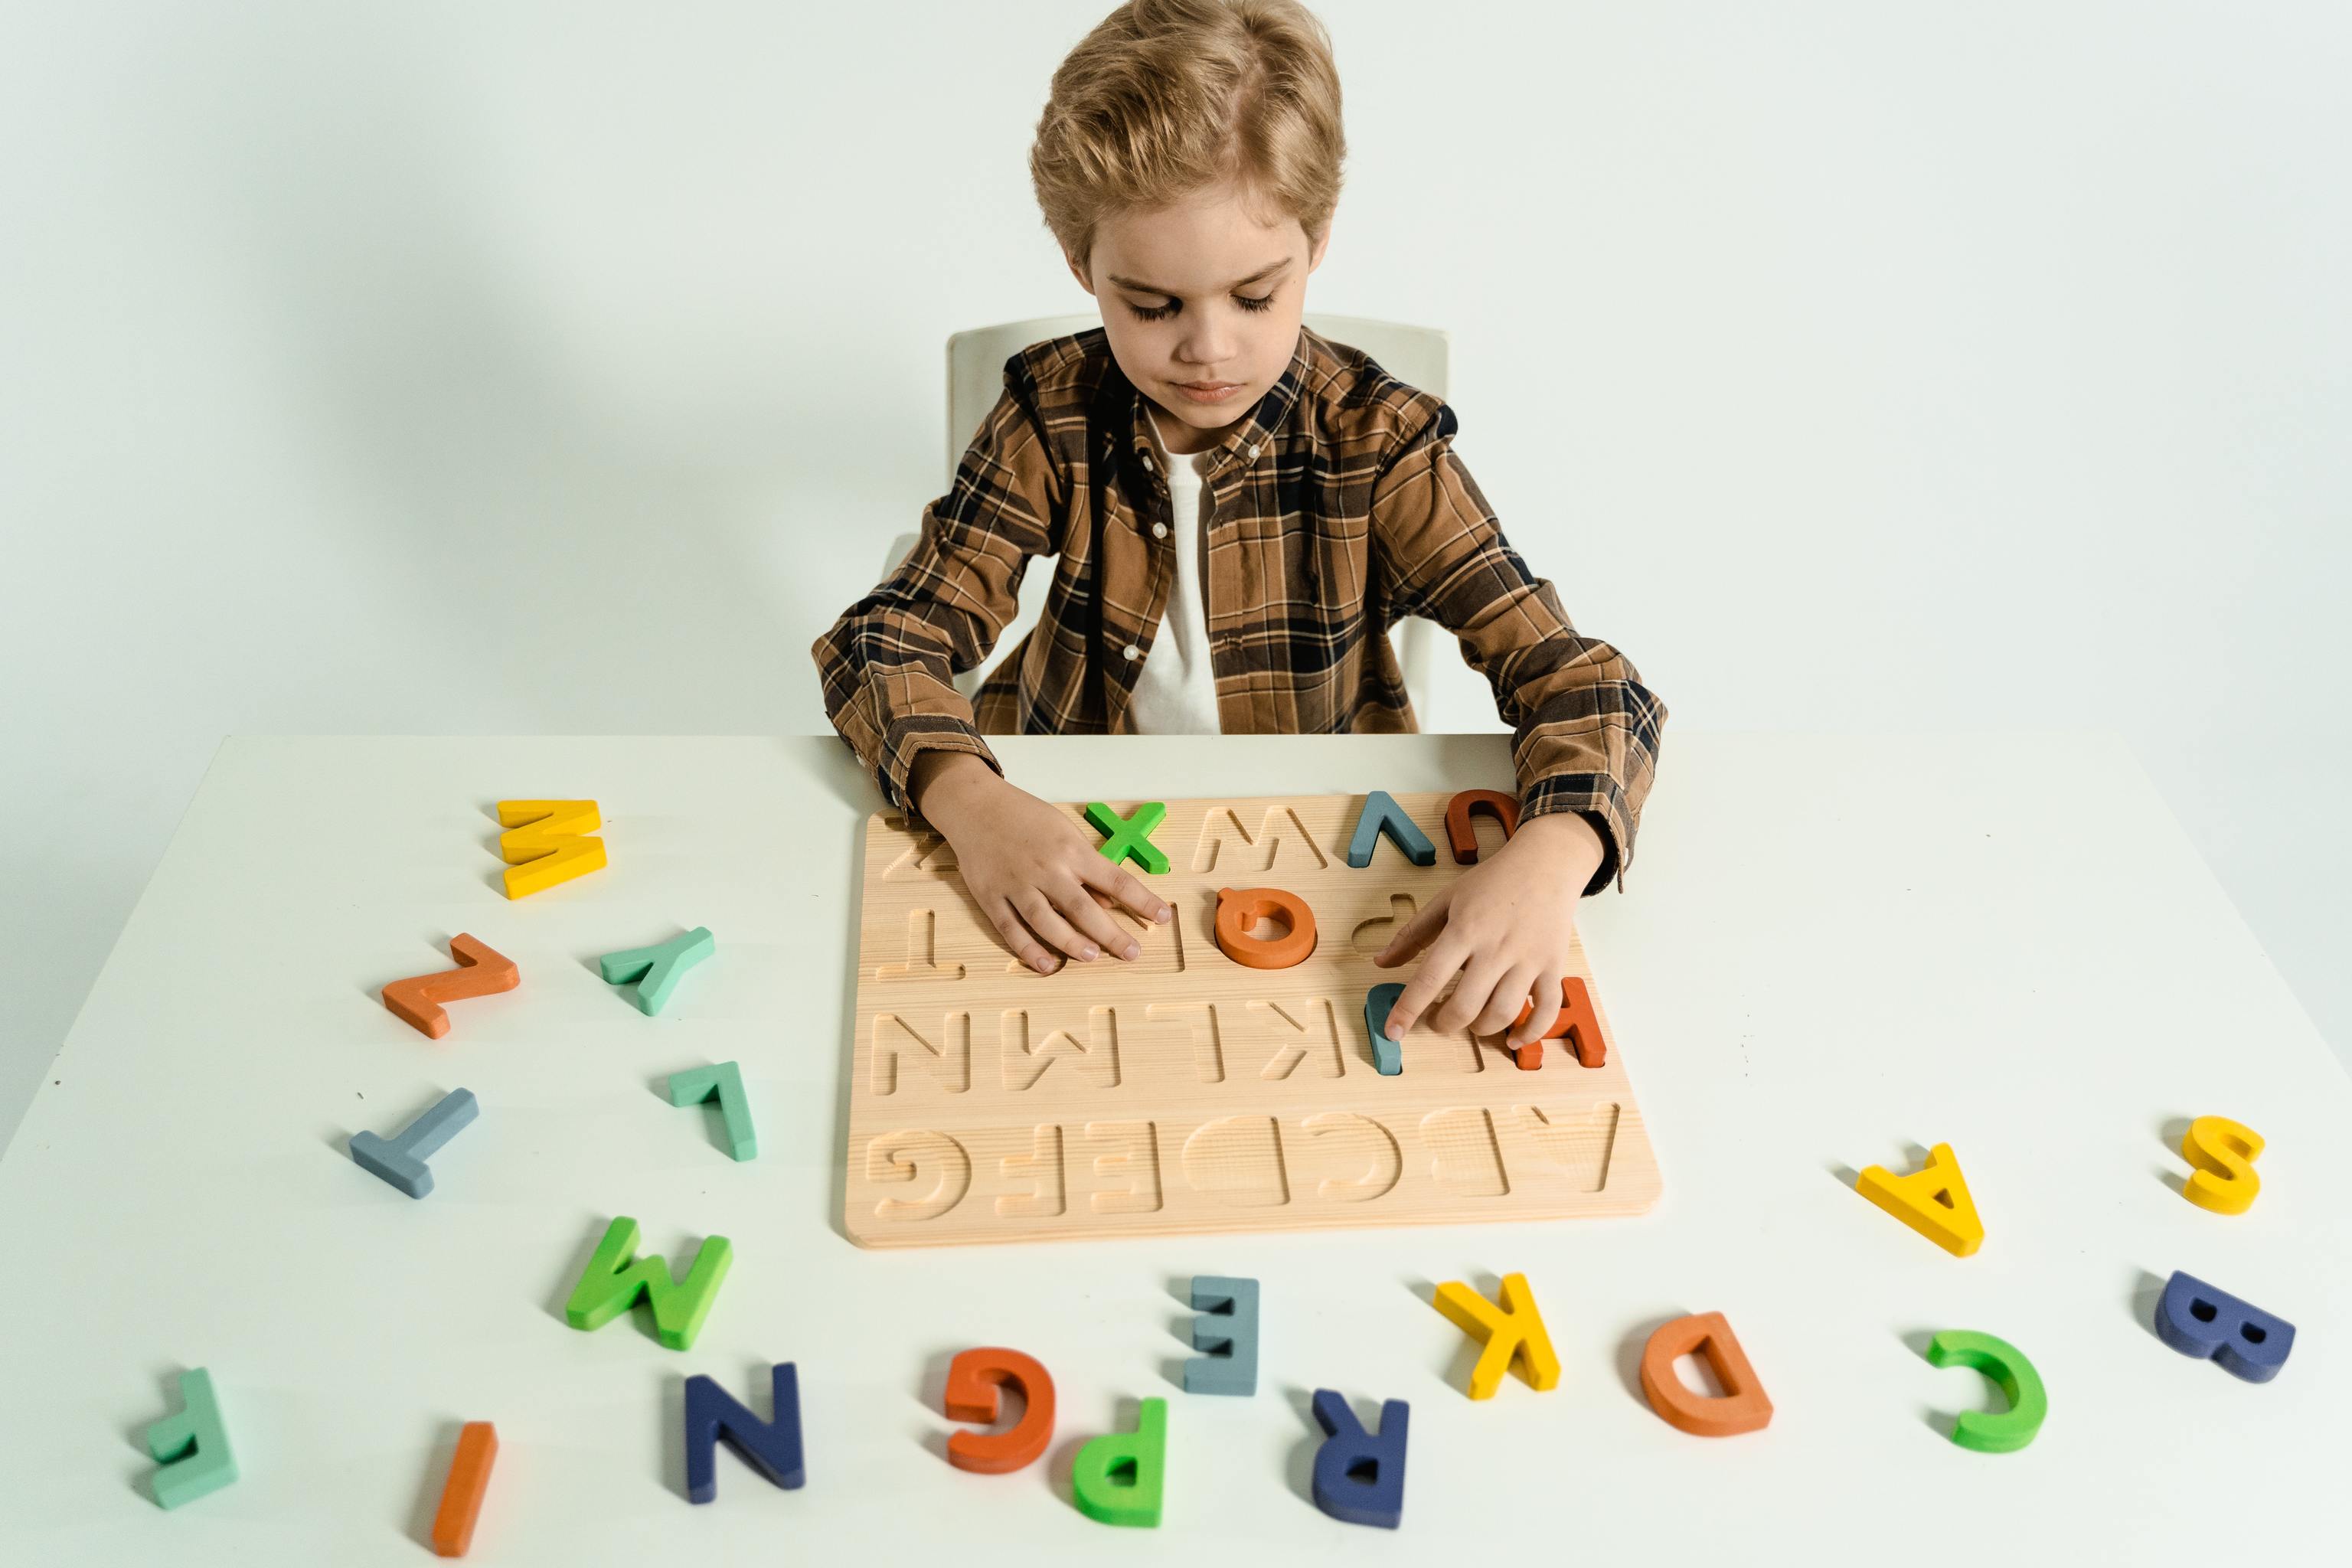 Un niño juega con un abecedario de letras de madera.